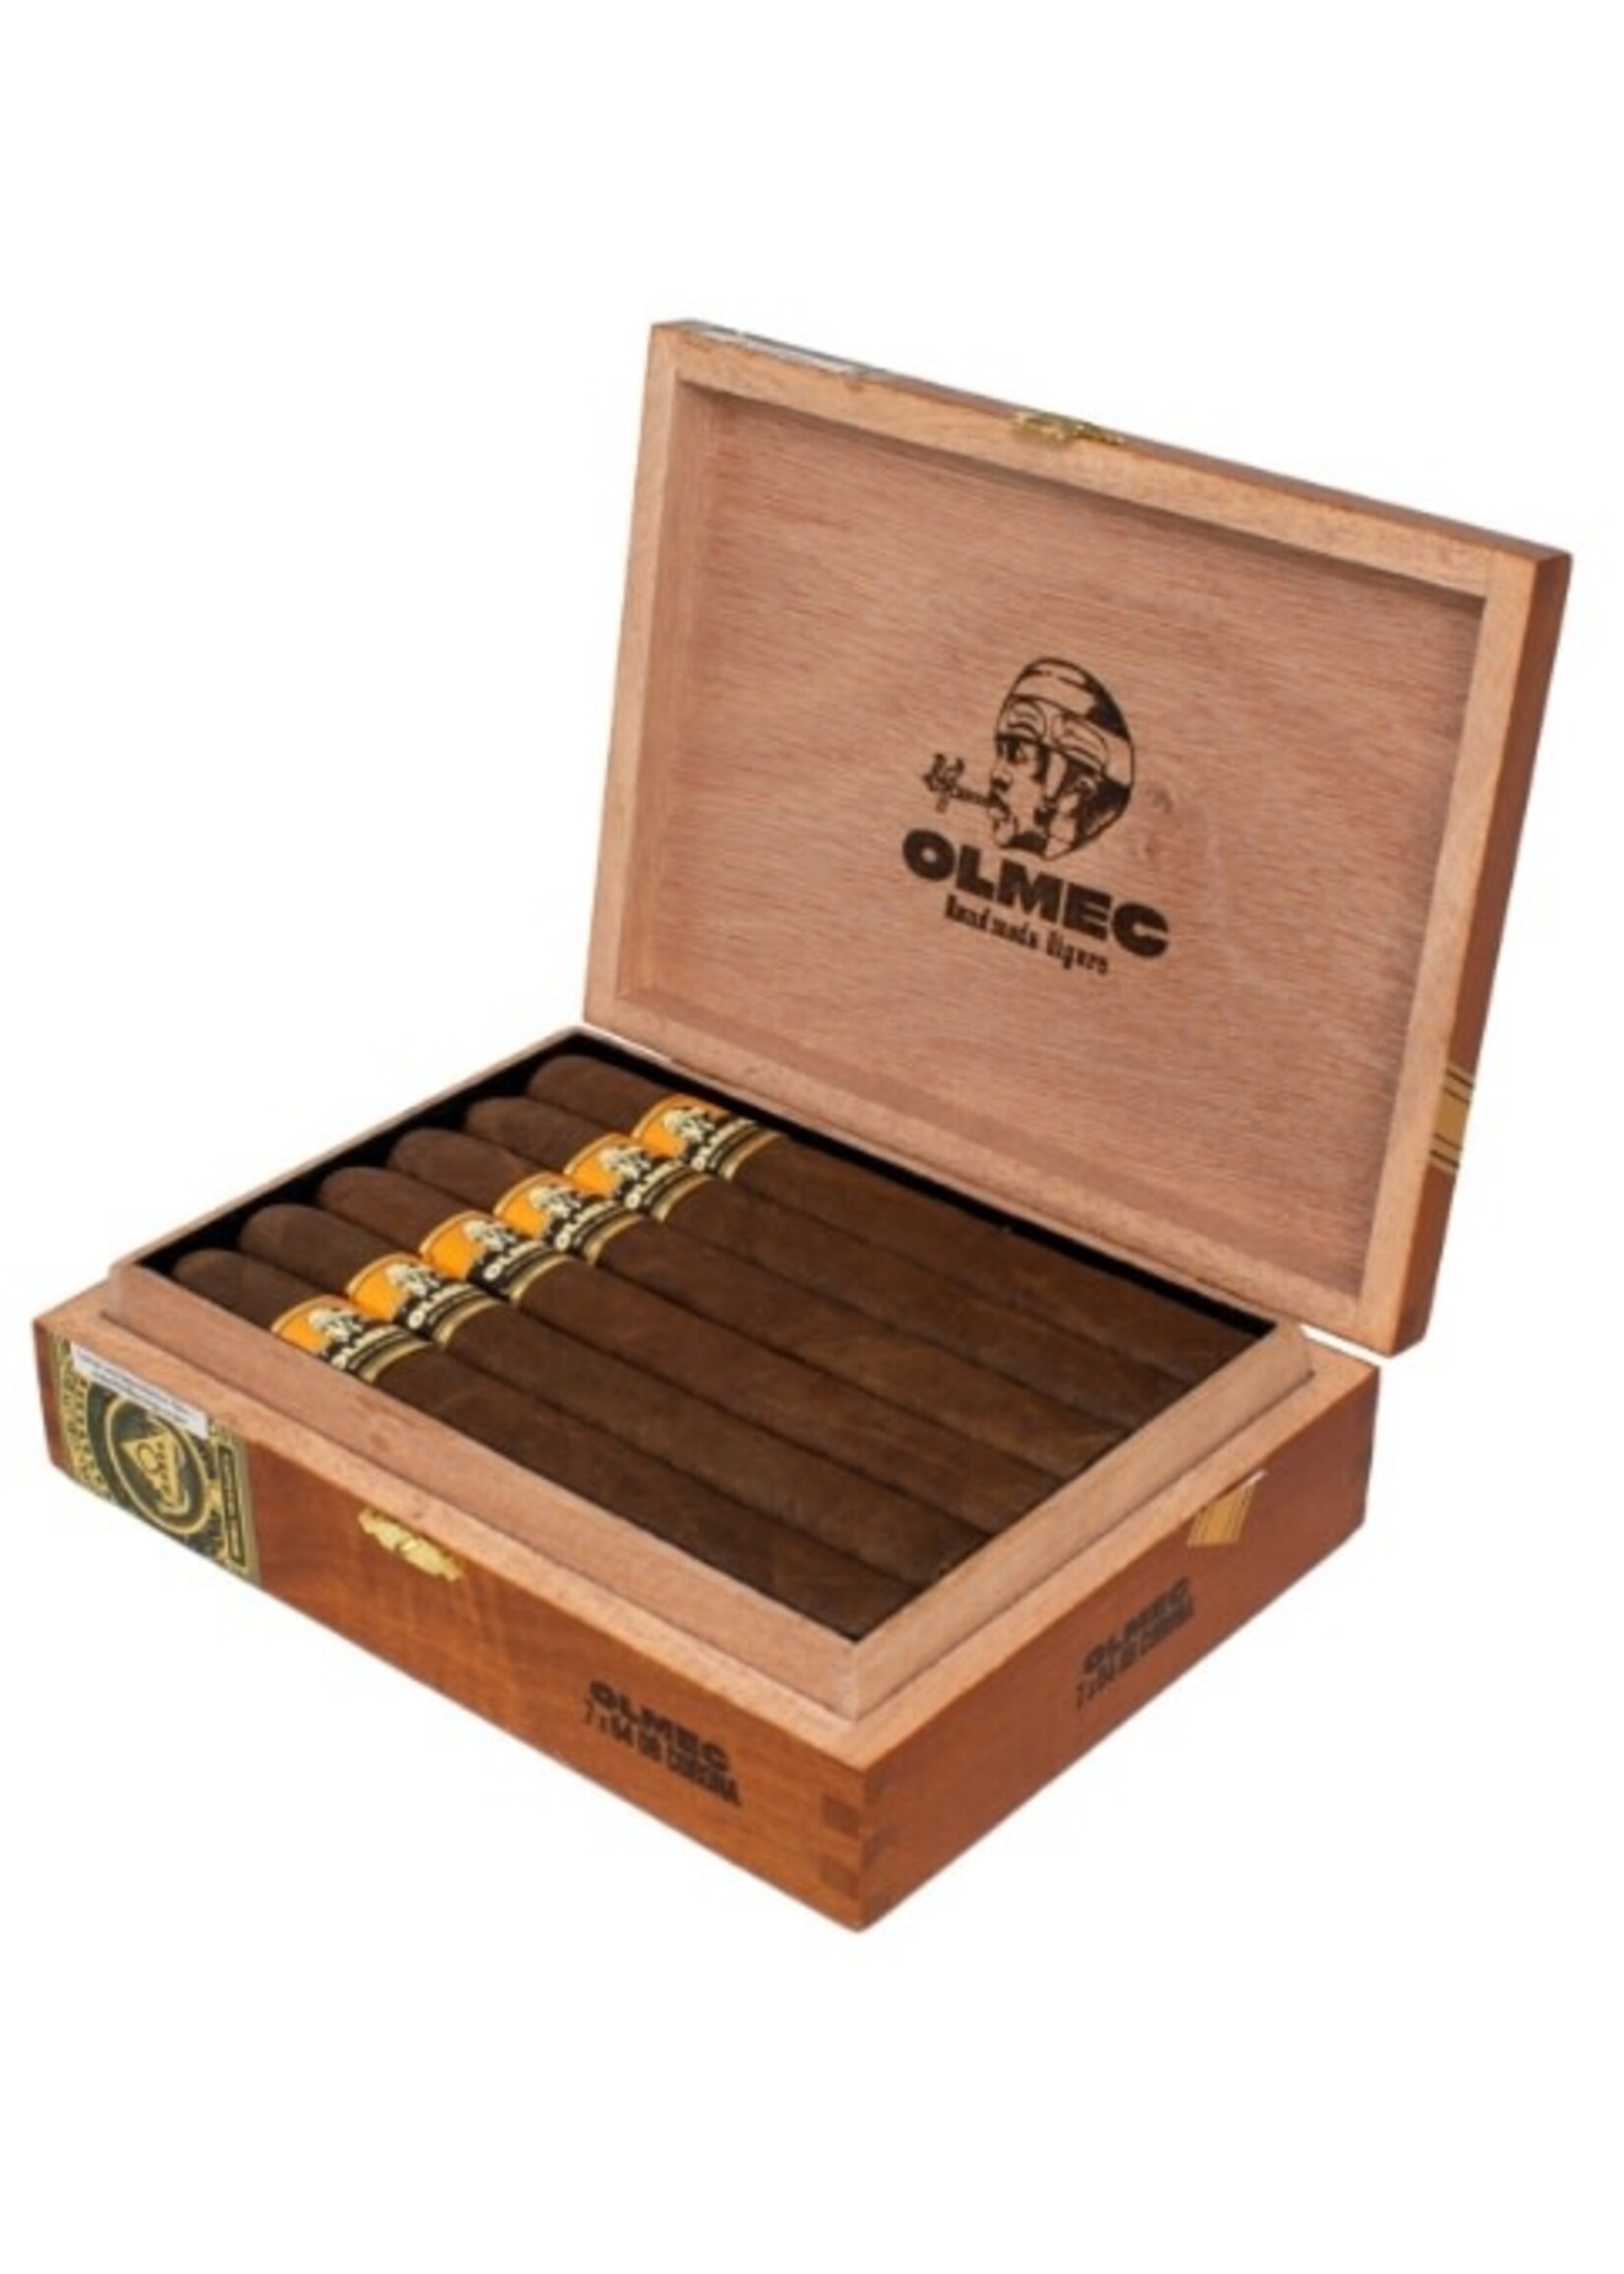 Foundation Cigars Foundation Cigars -Olmec Claro- Double Corona 7x54